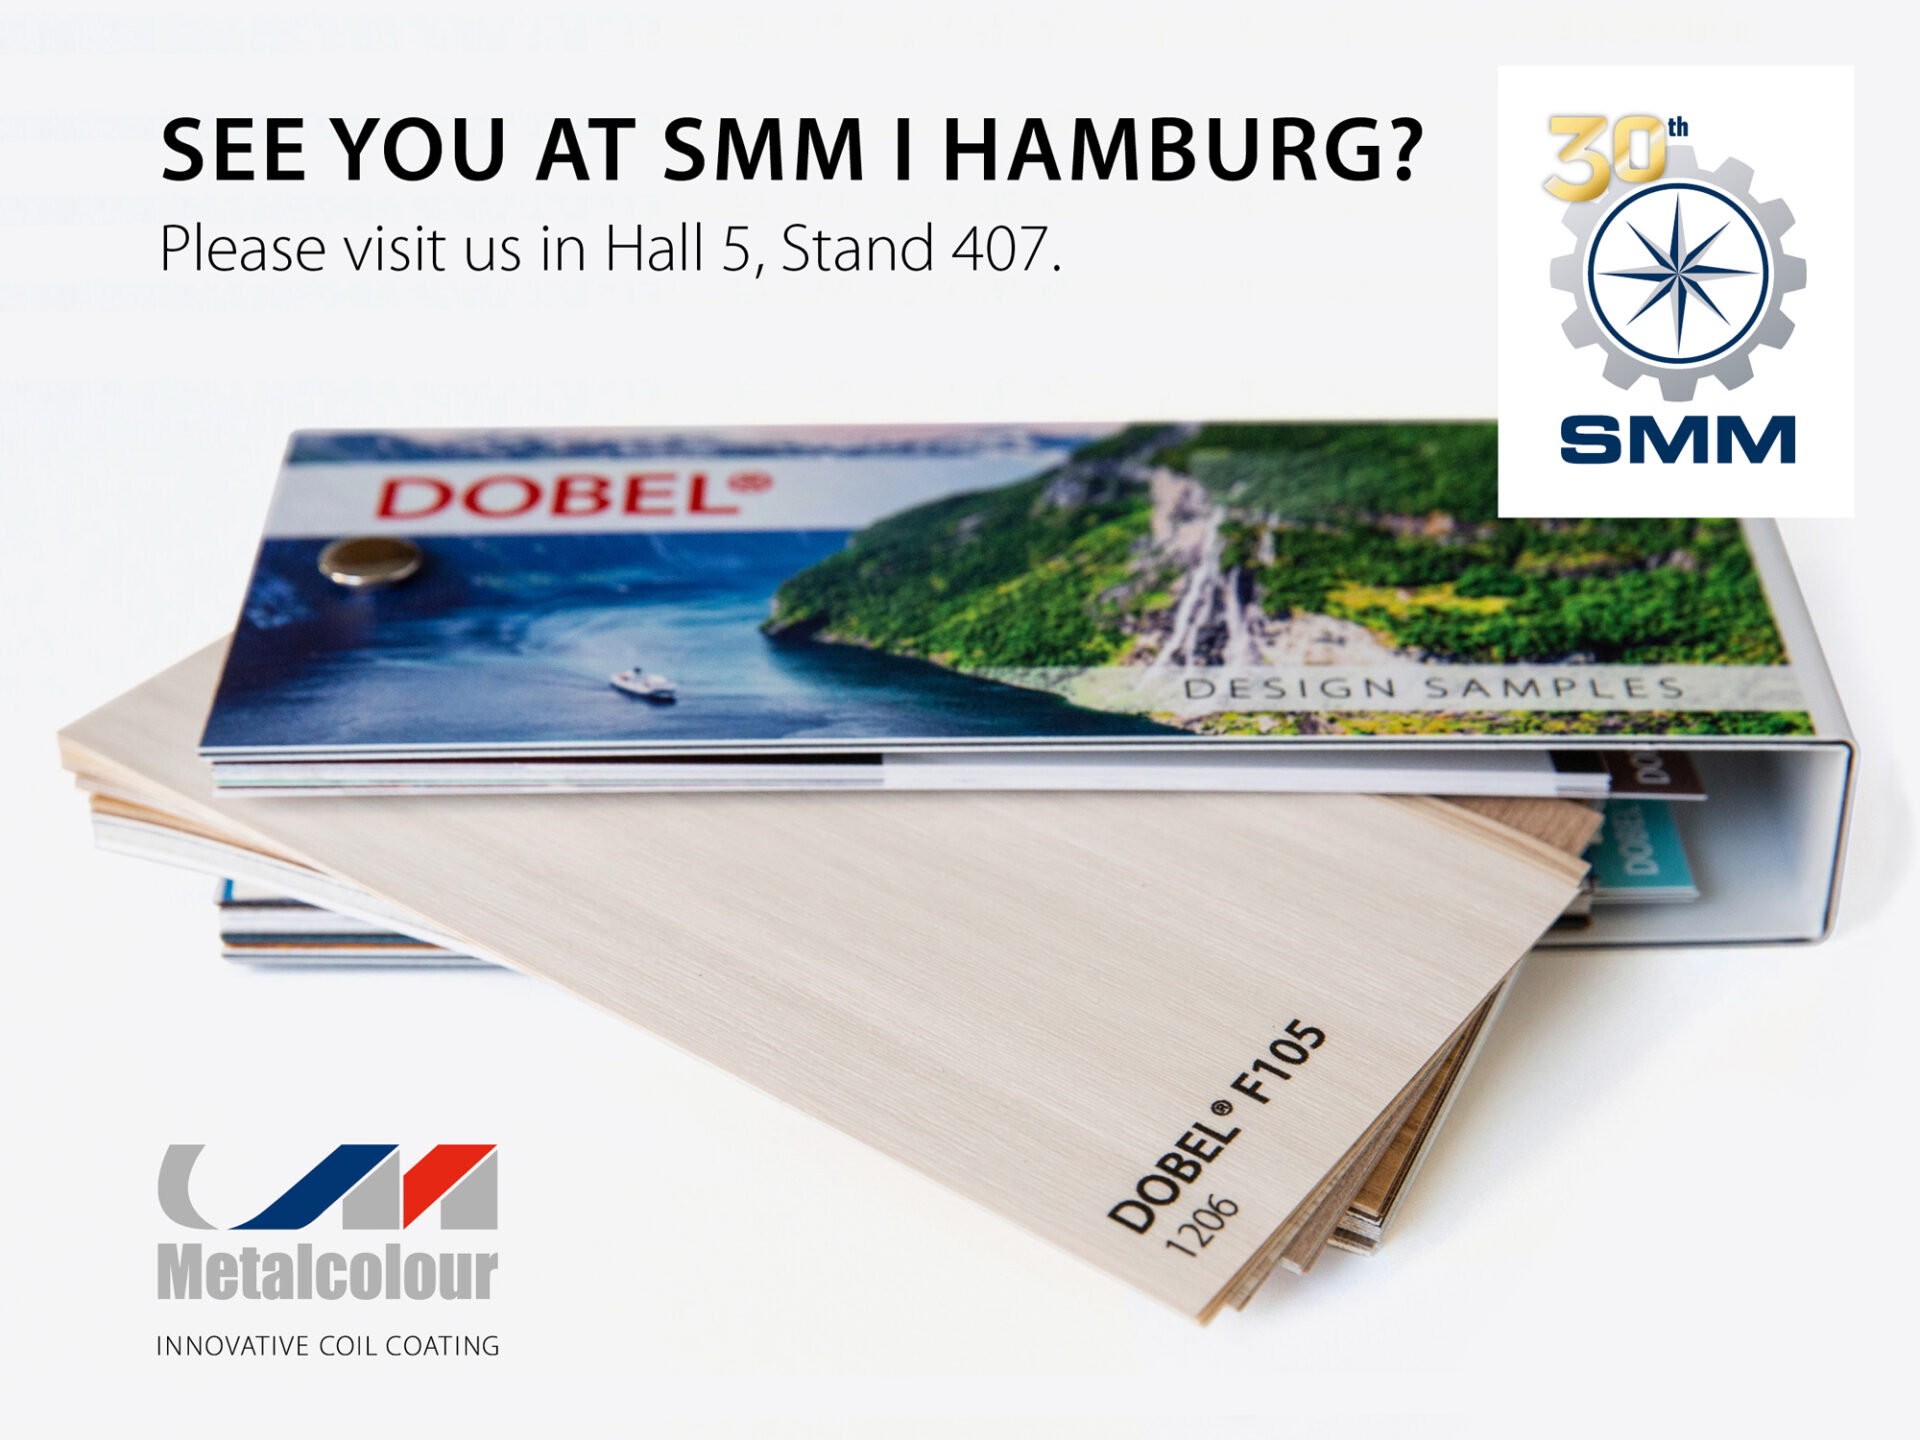 Invitation for SMM in Hamburg 2022.